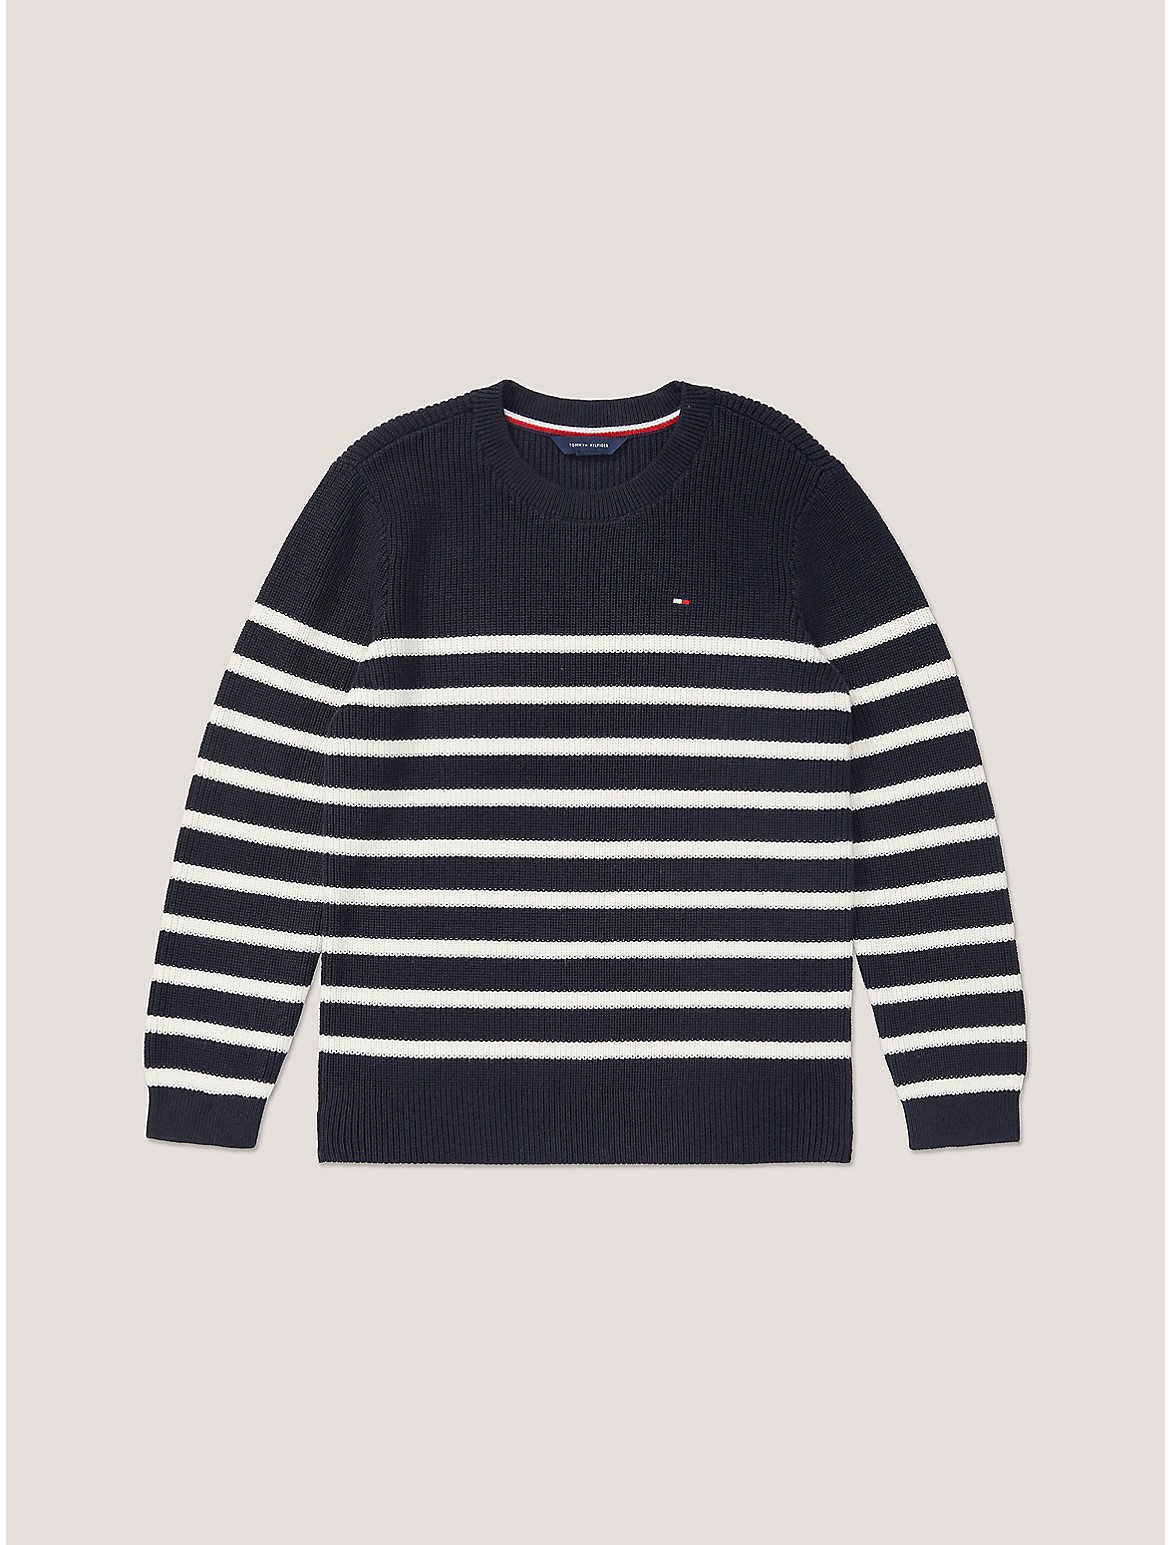 Tommy Hilfiger Boys' Kids' Breton Stripe Crewneck Sweater